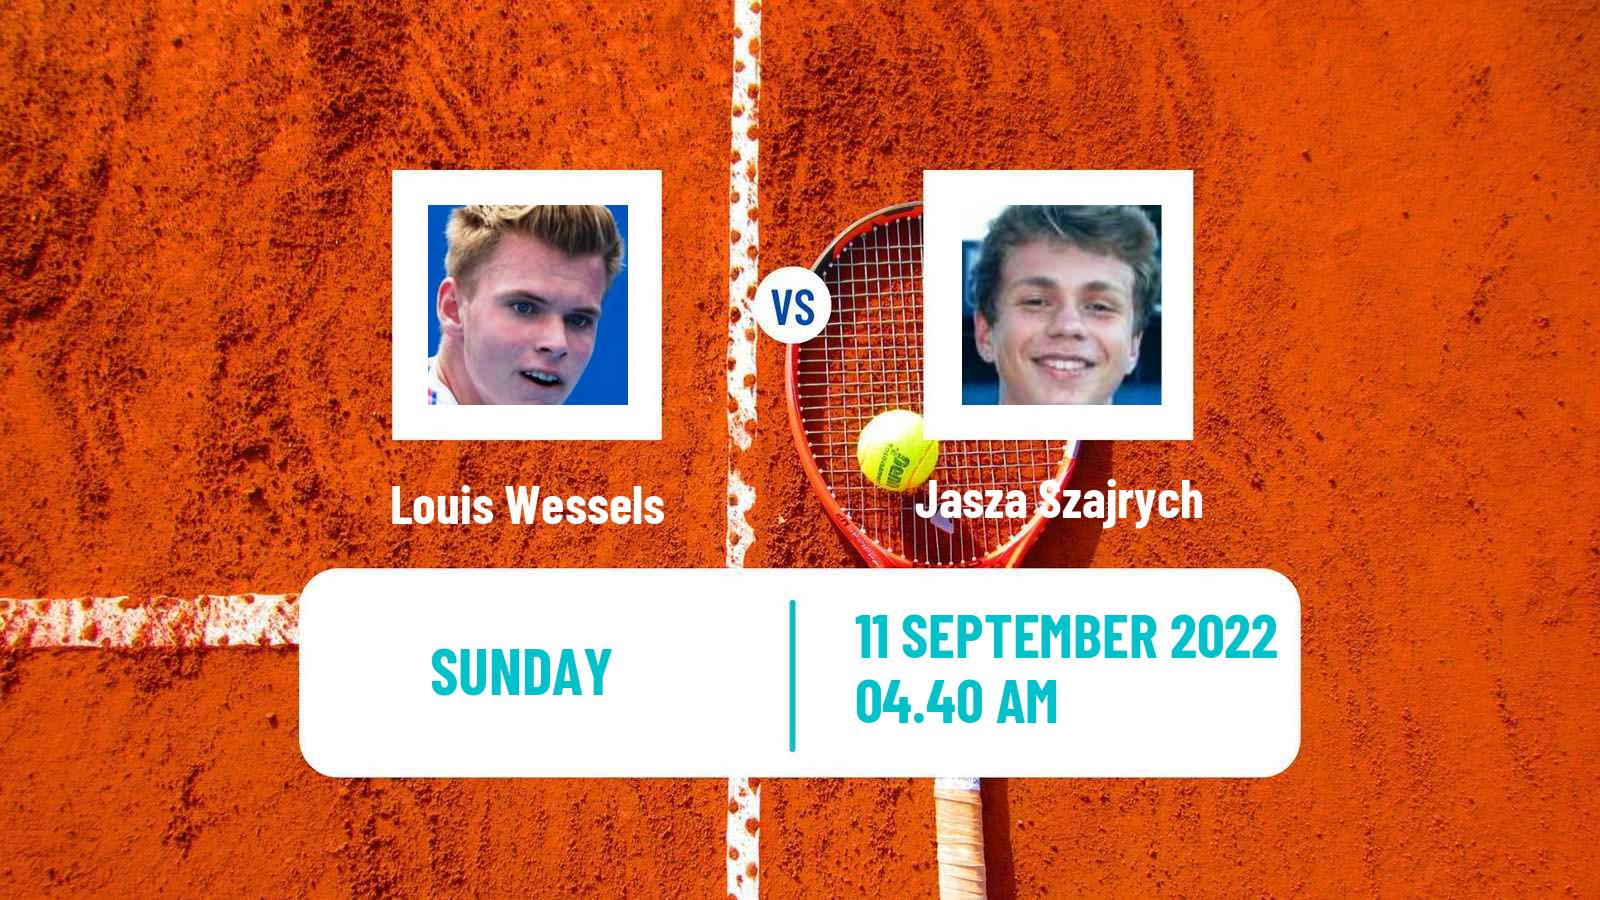 Tennis ATP Challenger Louis Wessels - Jasza Szajrych